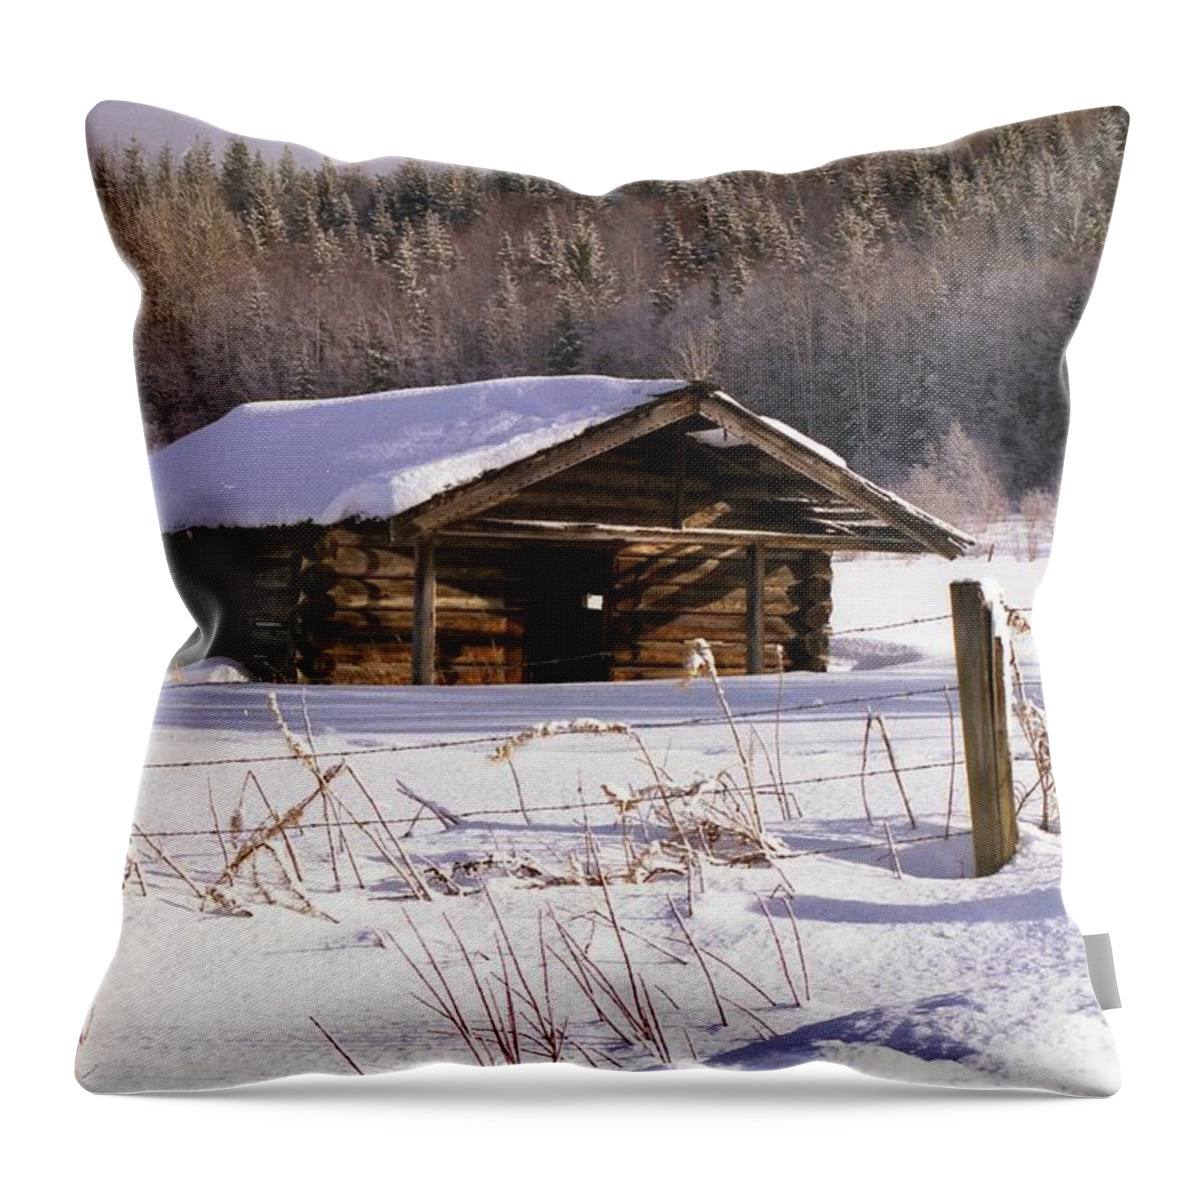 Snow Throw Pillow featuring the photograph Snowy Cabin by Vivian Martin